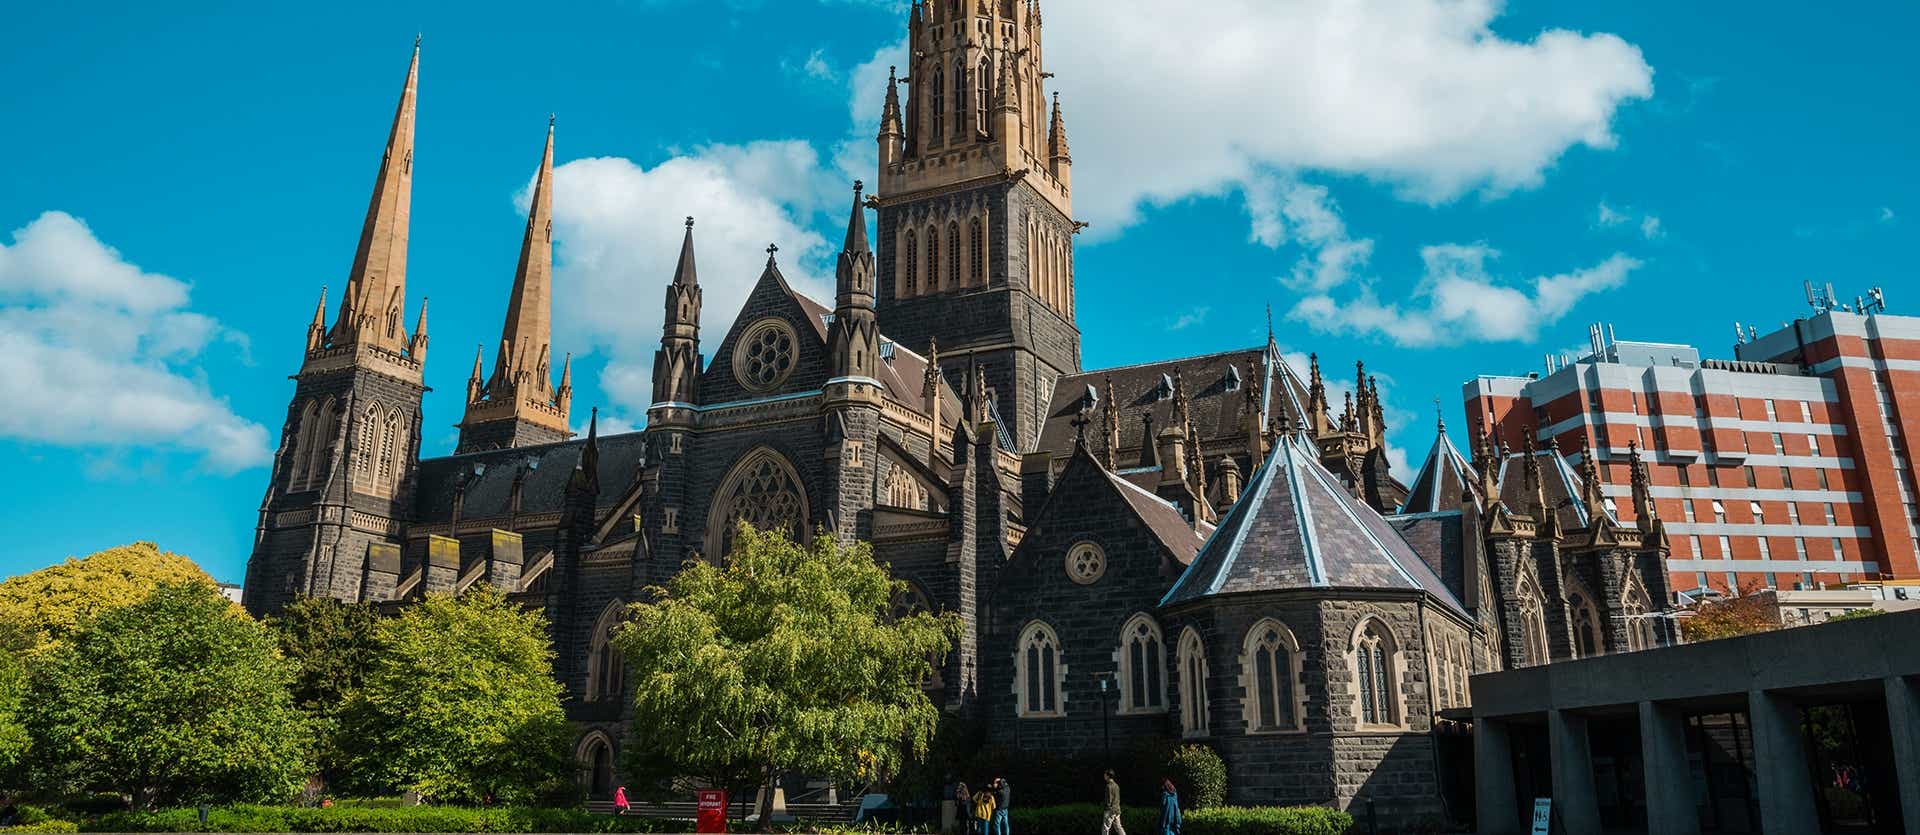 St.-Patrick-Kathedrale <span class="iconos separador"></span> Melbourne